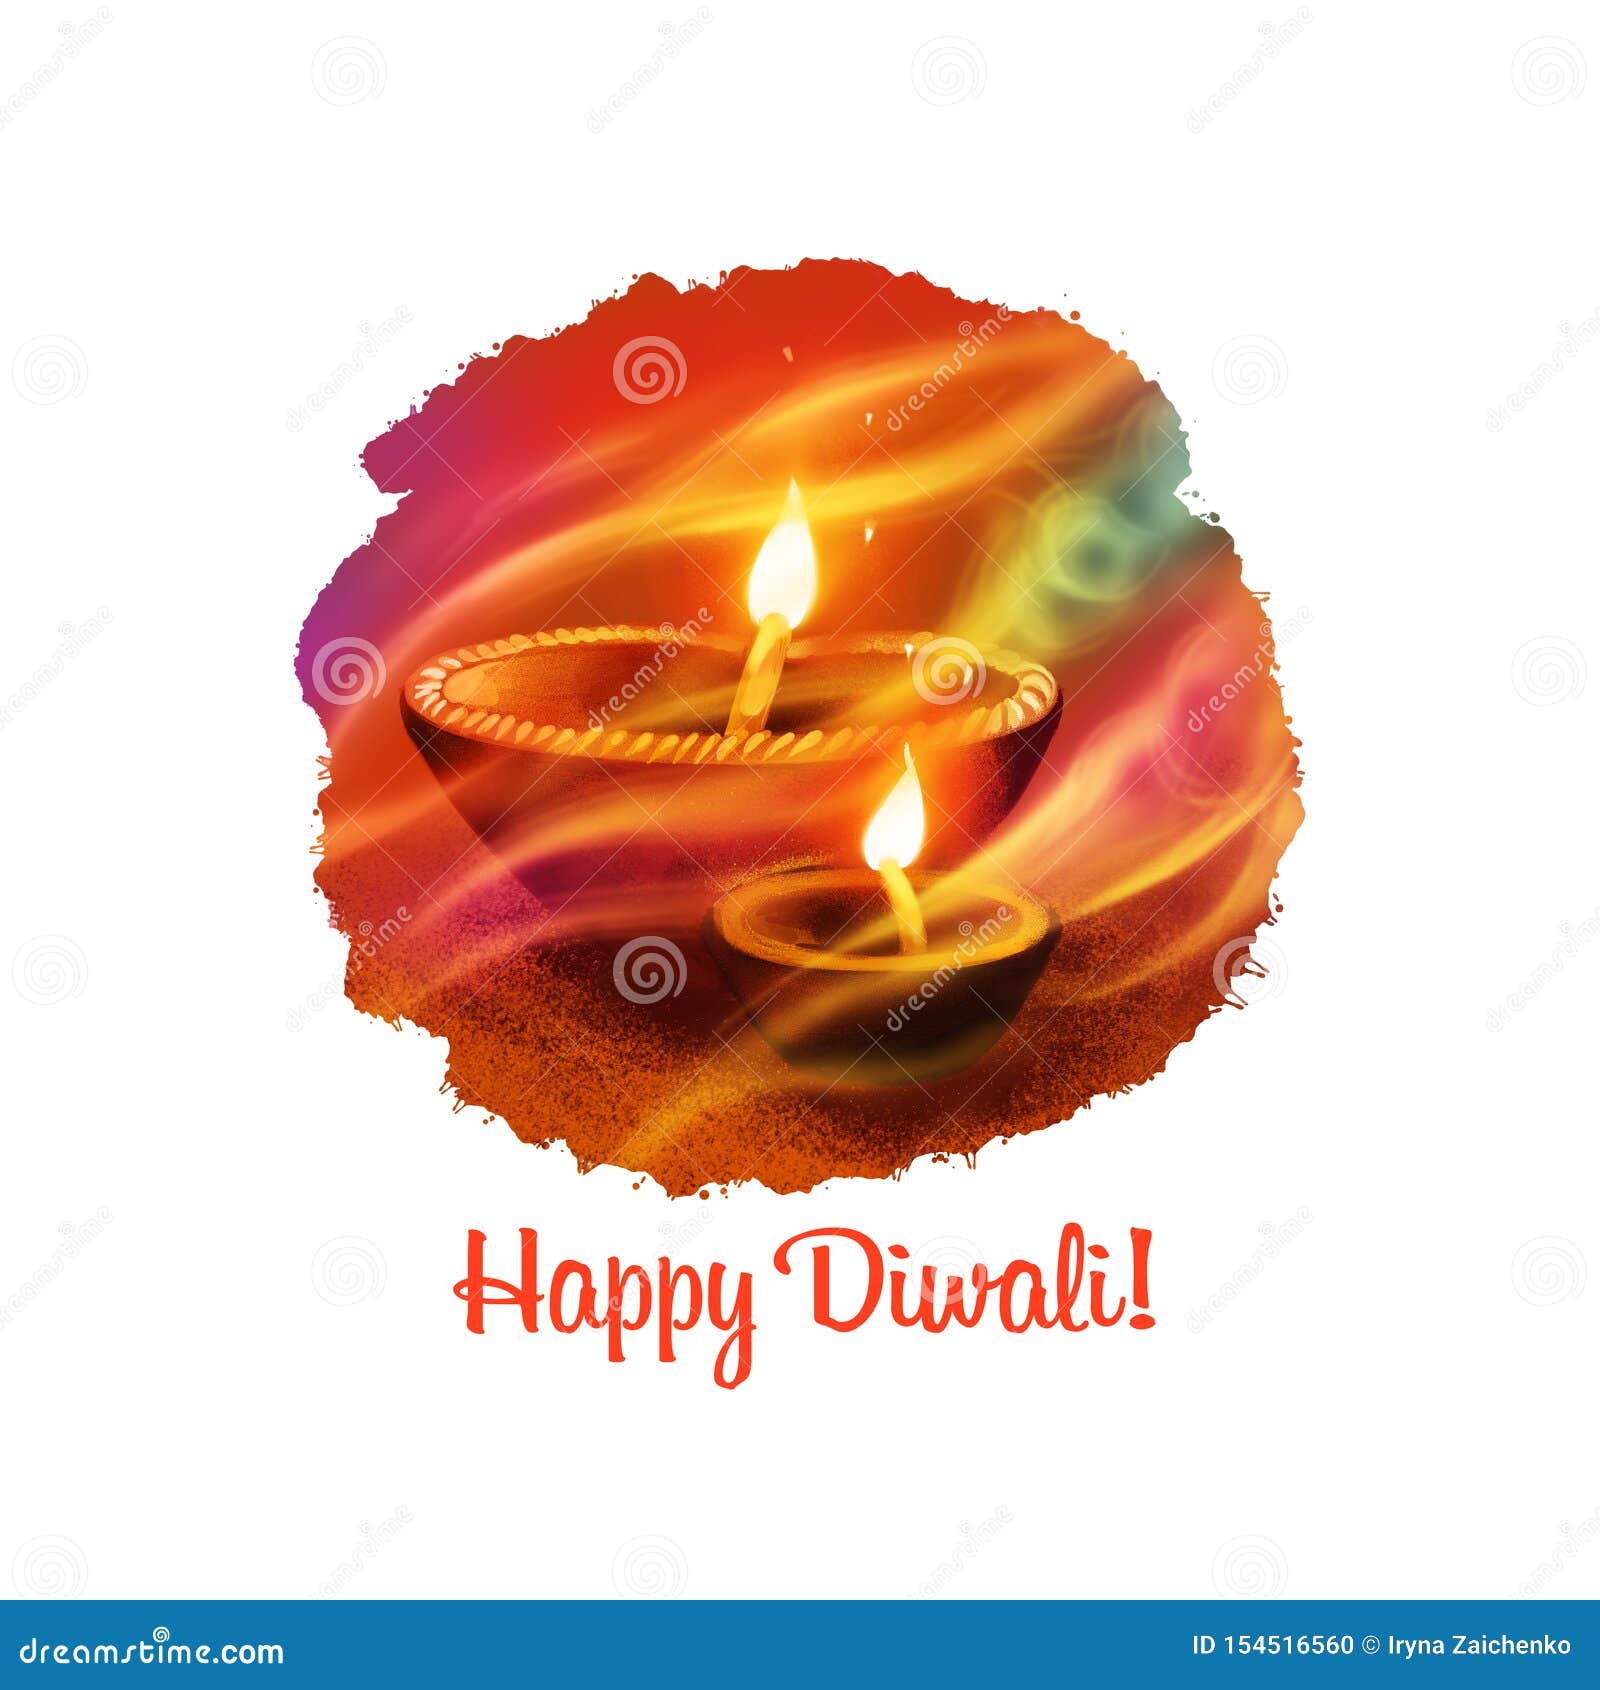 Happy Diwali Digital Art Illustration Isolated on White Background. Indian  Festival of Lights Stock Illustration - Illustration of krishna, light:  154516560